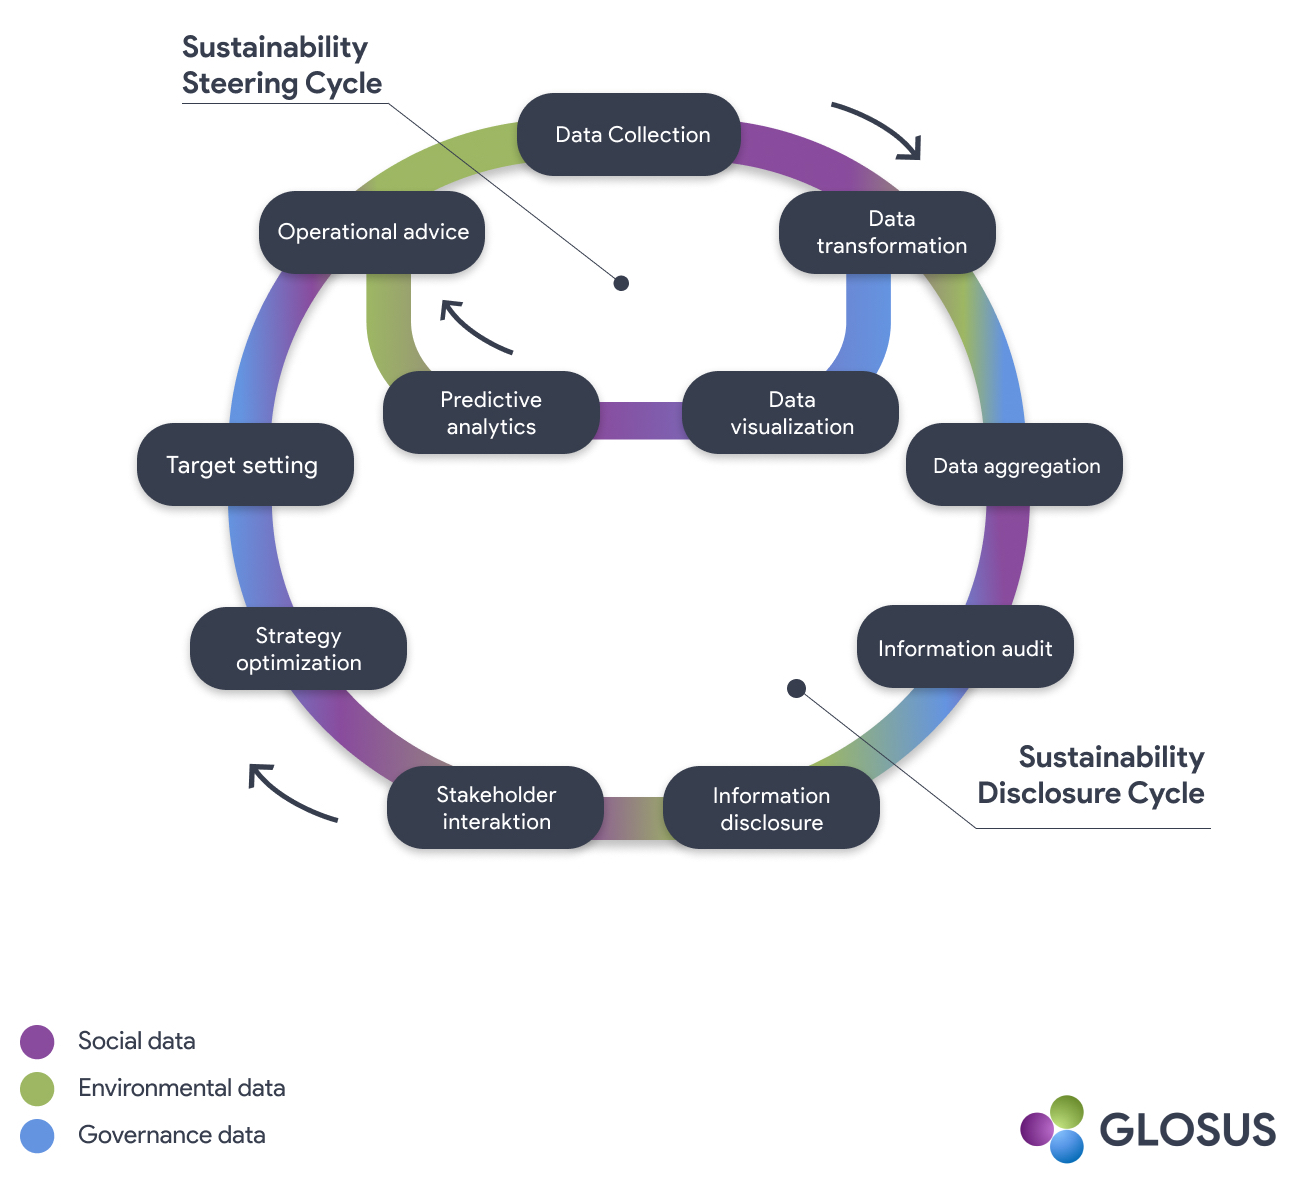 Sustainability Information Management Cycle of GLOSUS